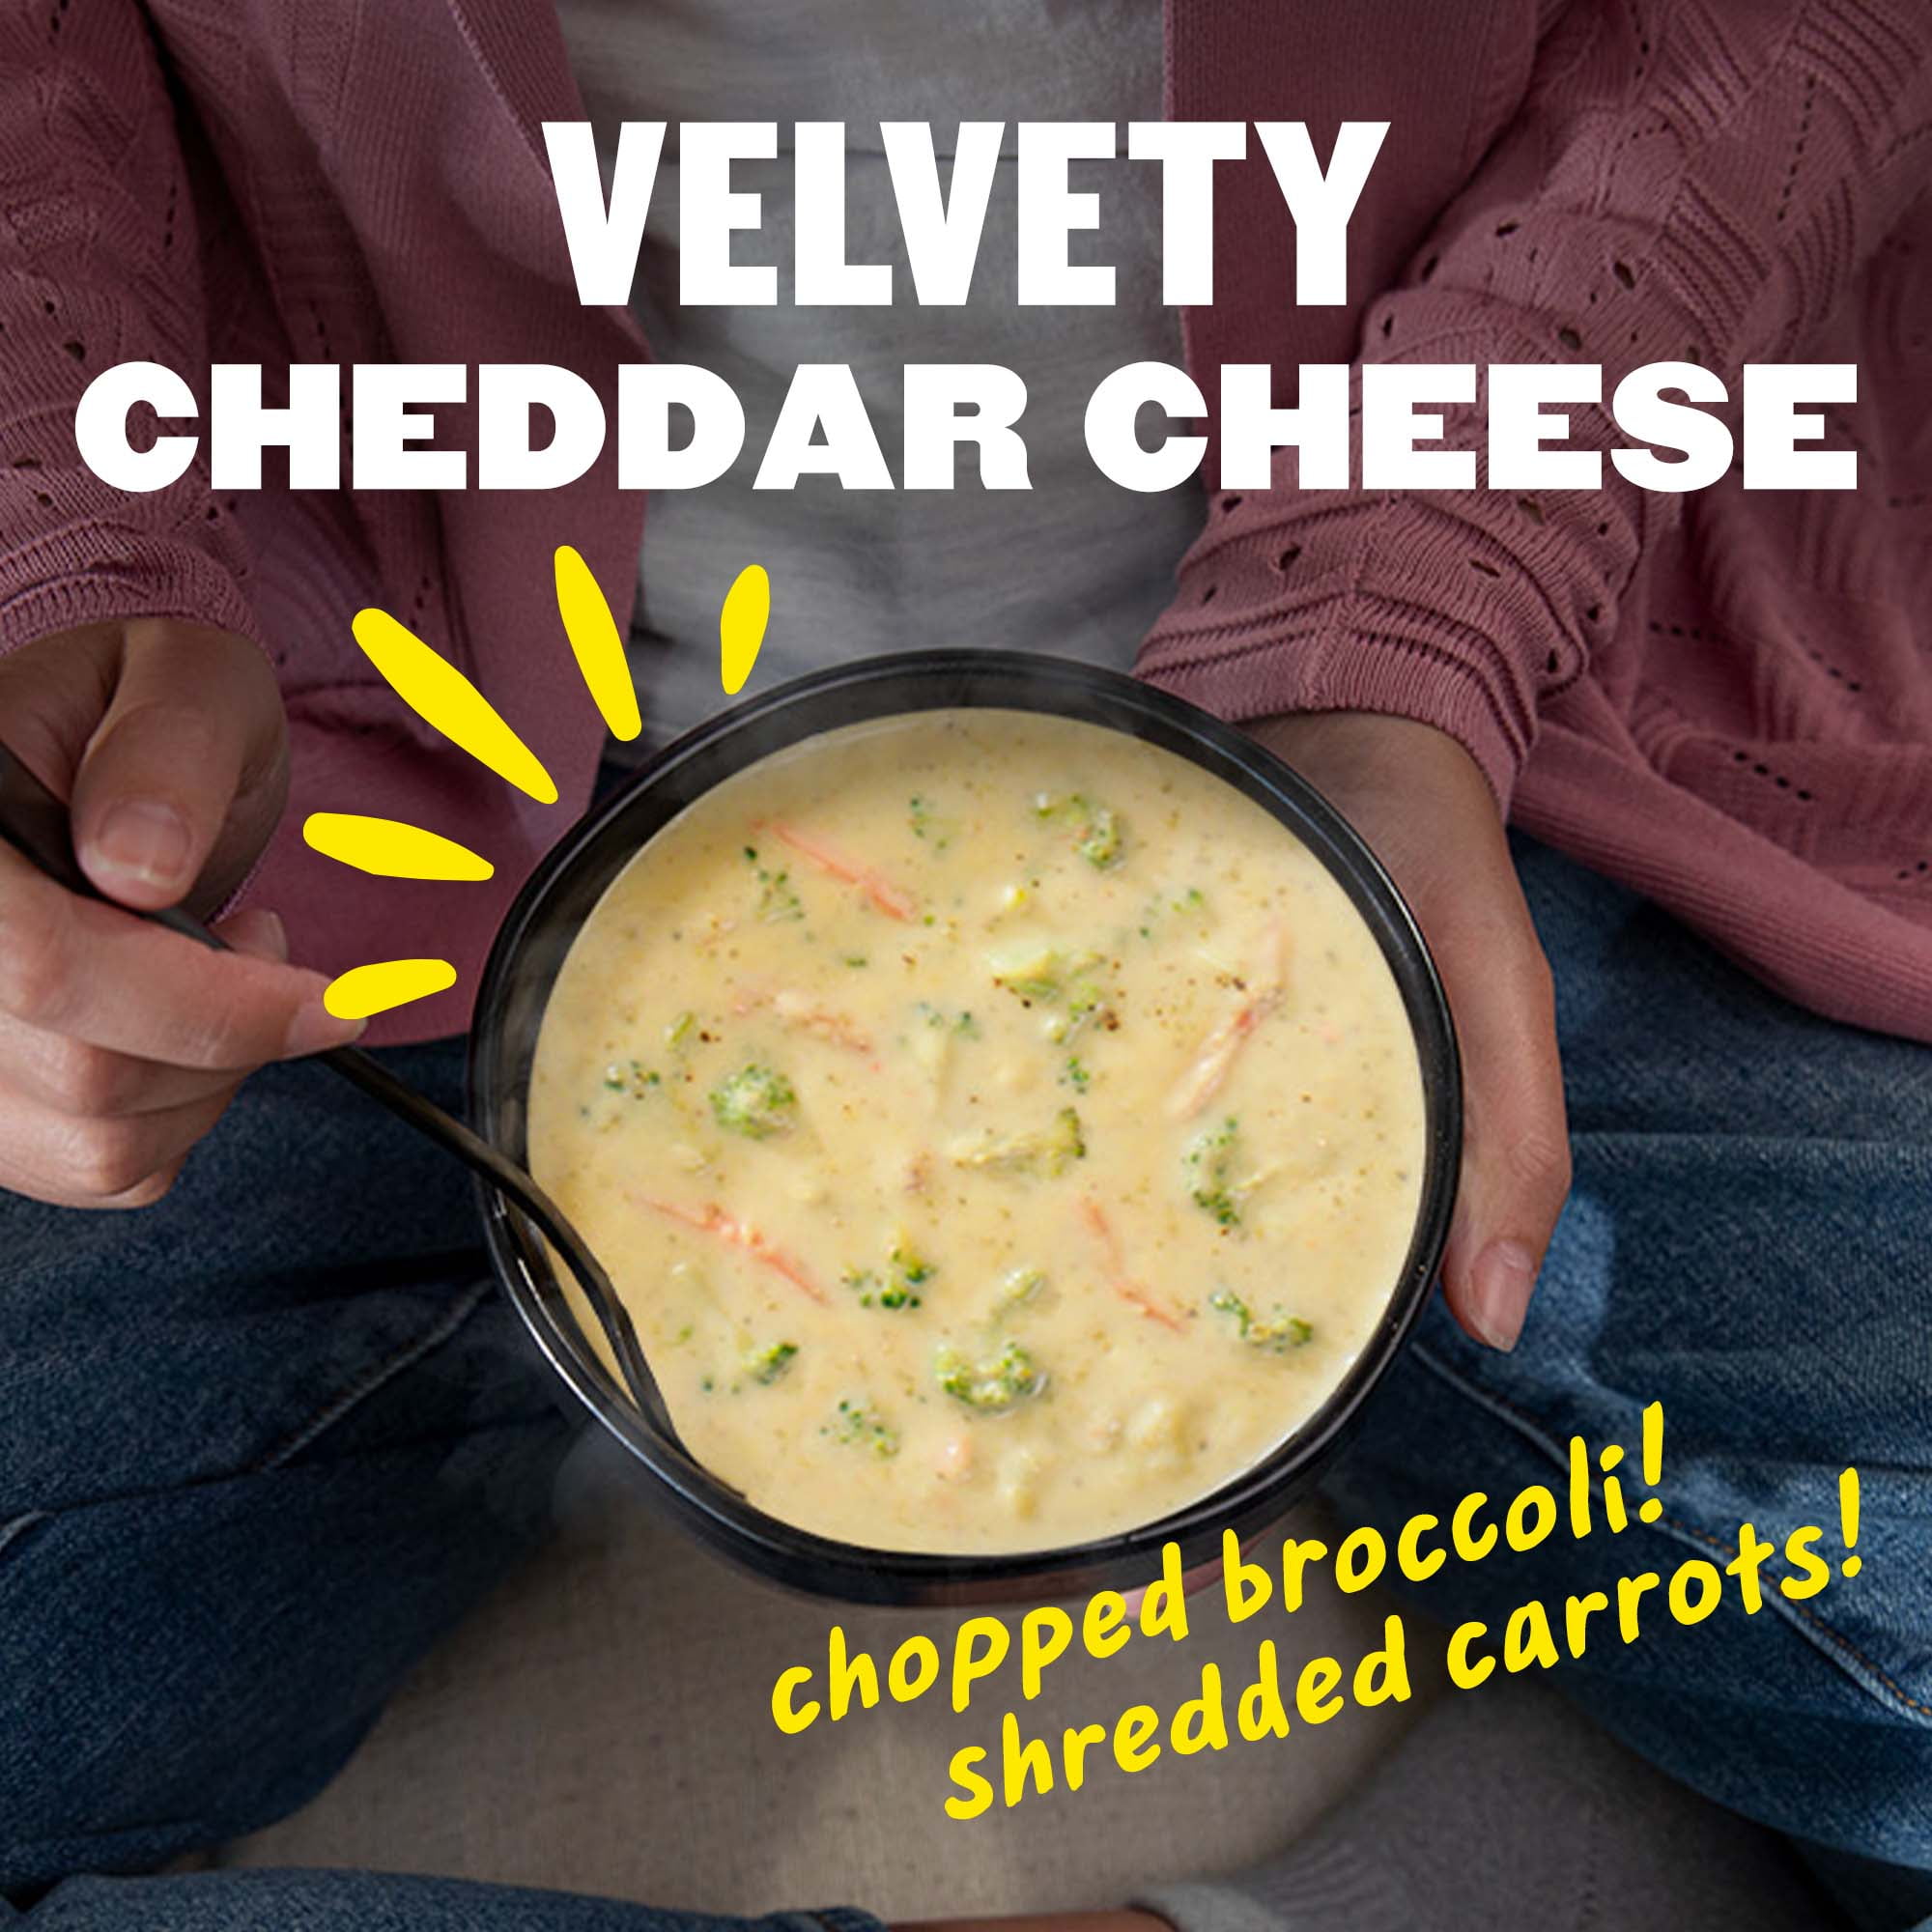 Panera Bread Broccoli Cheddar Soup - 16oz